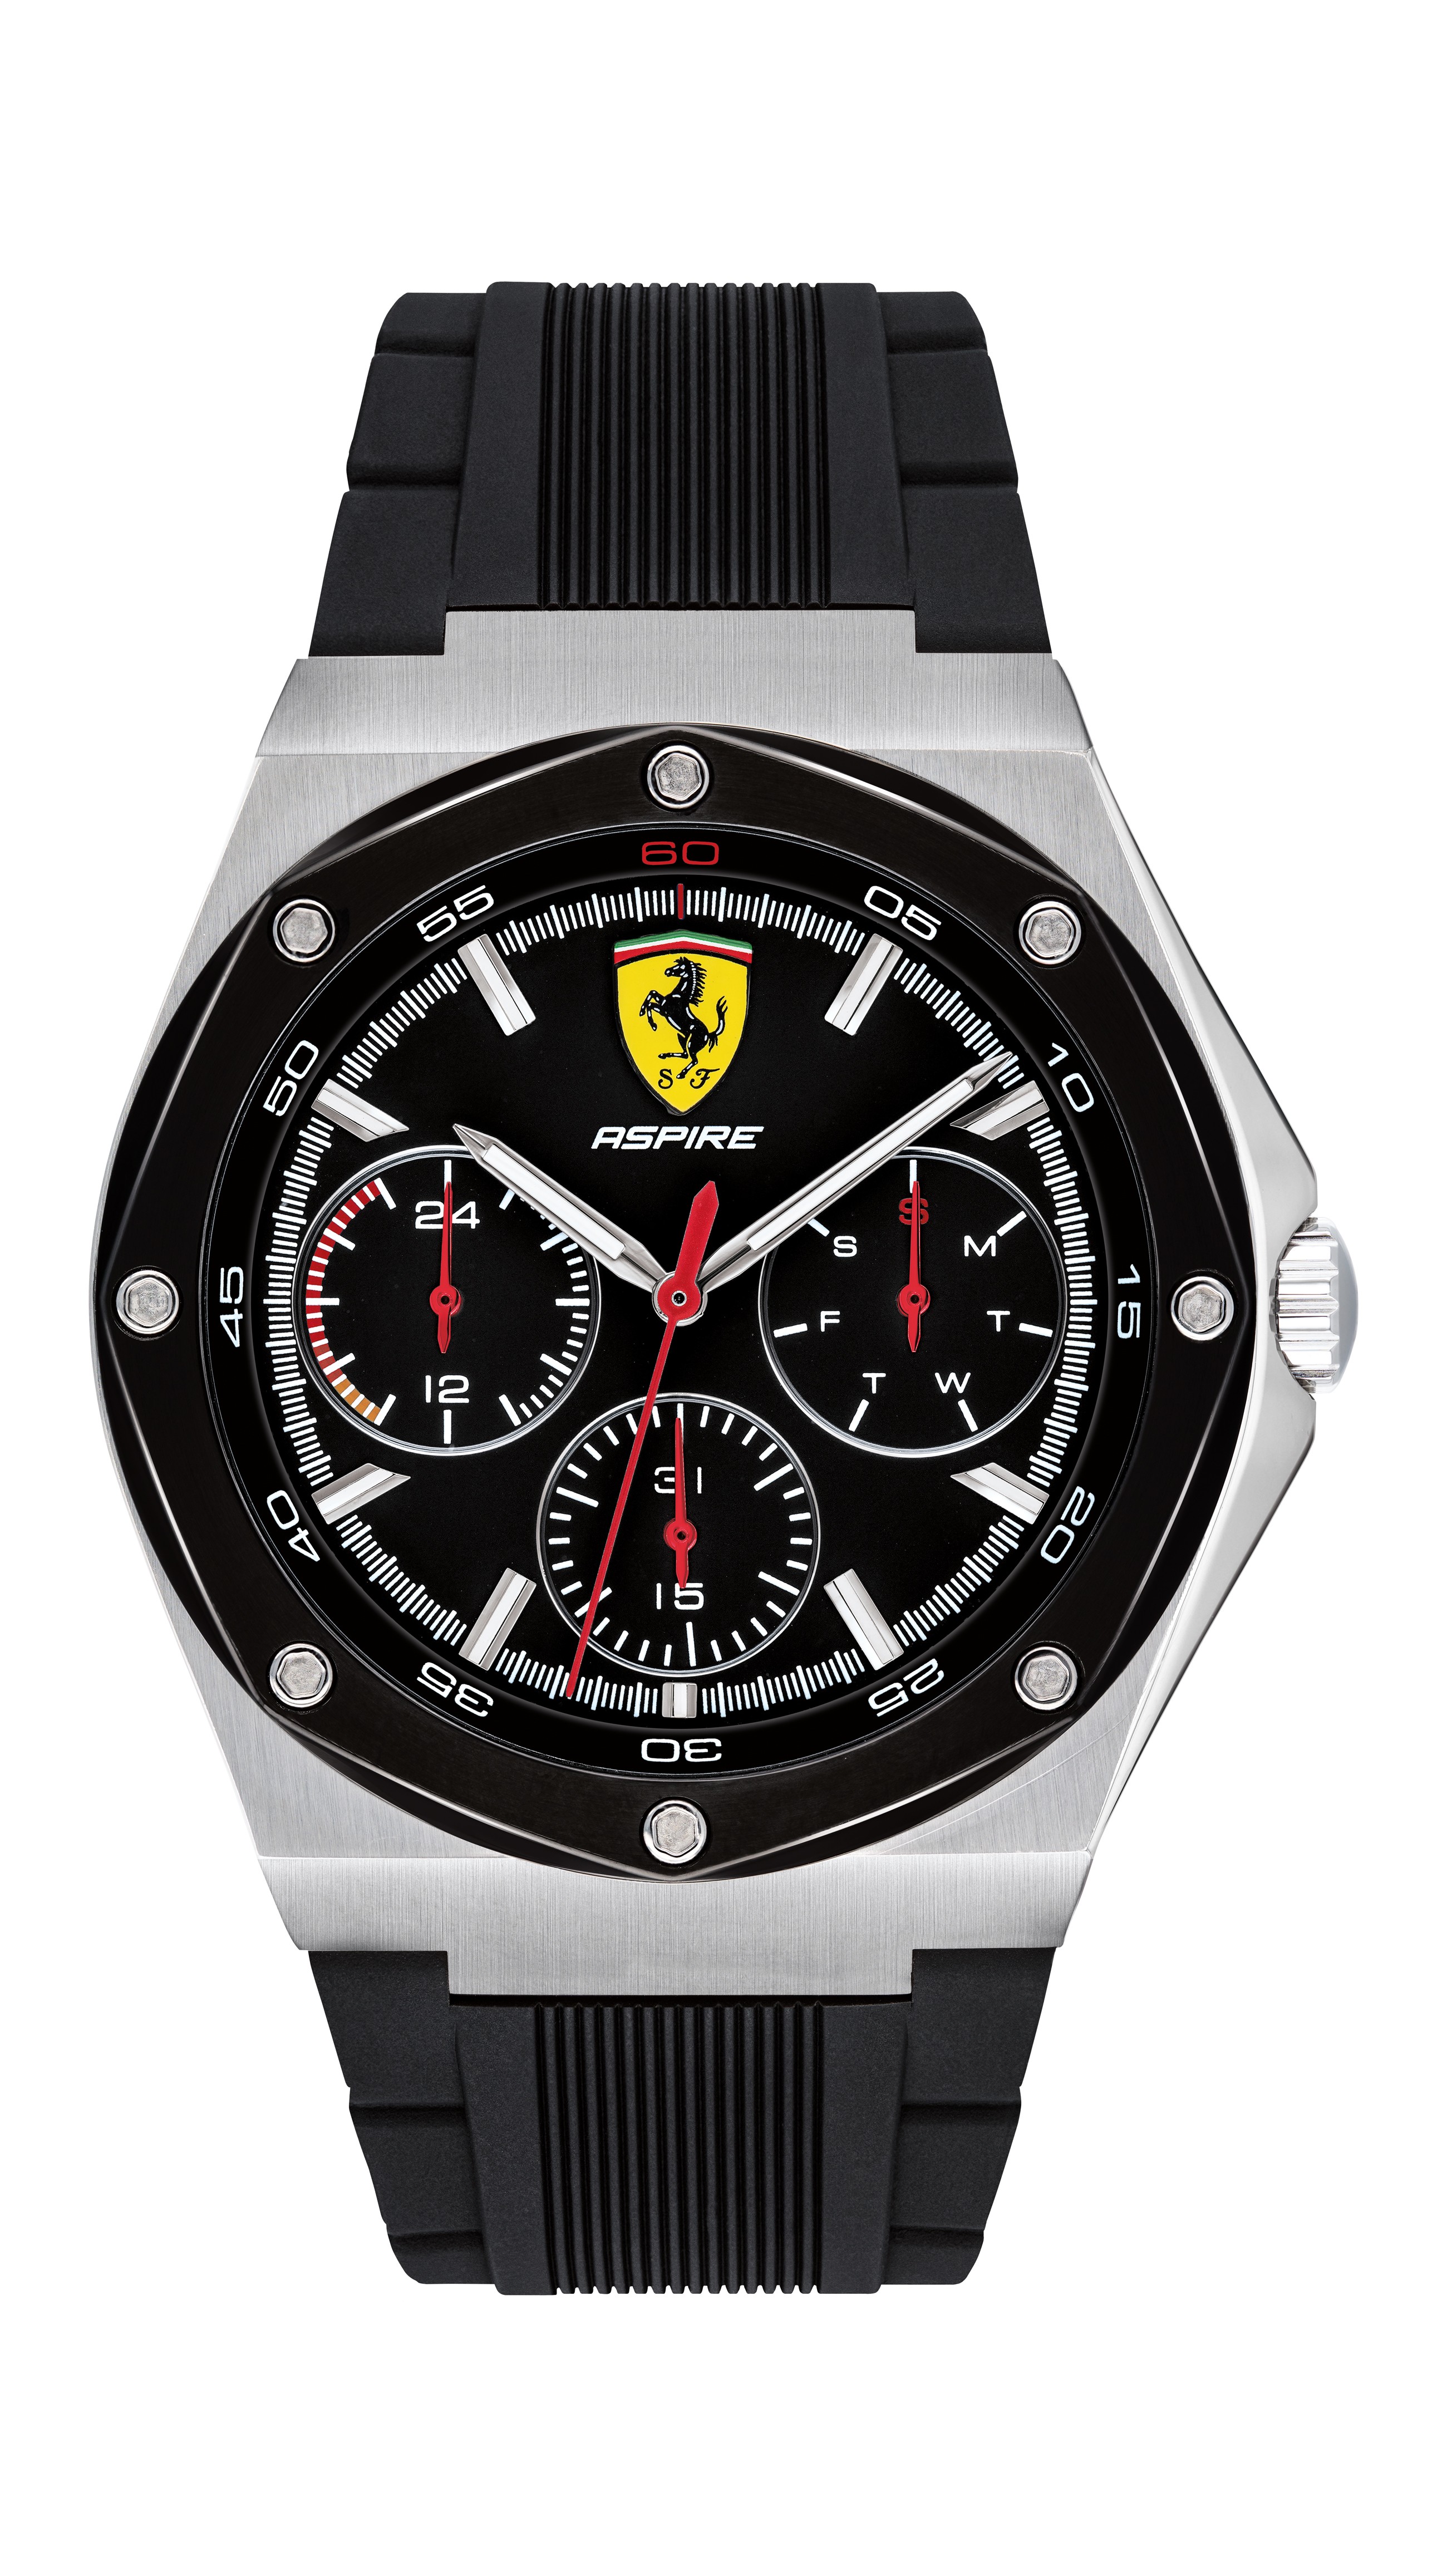 Ferrari 法拉利 奔馳日曆手錶-黑x42mm(08305373)